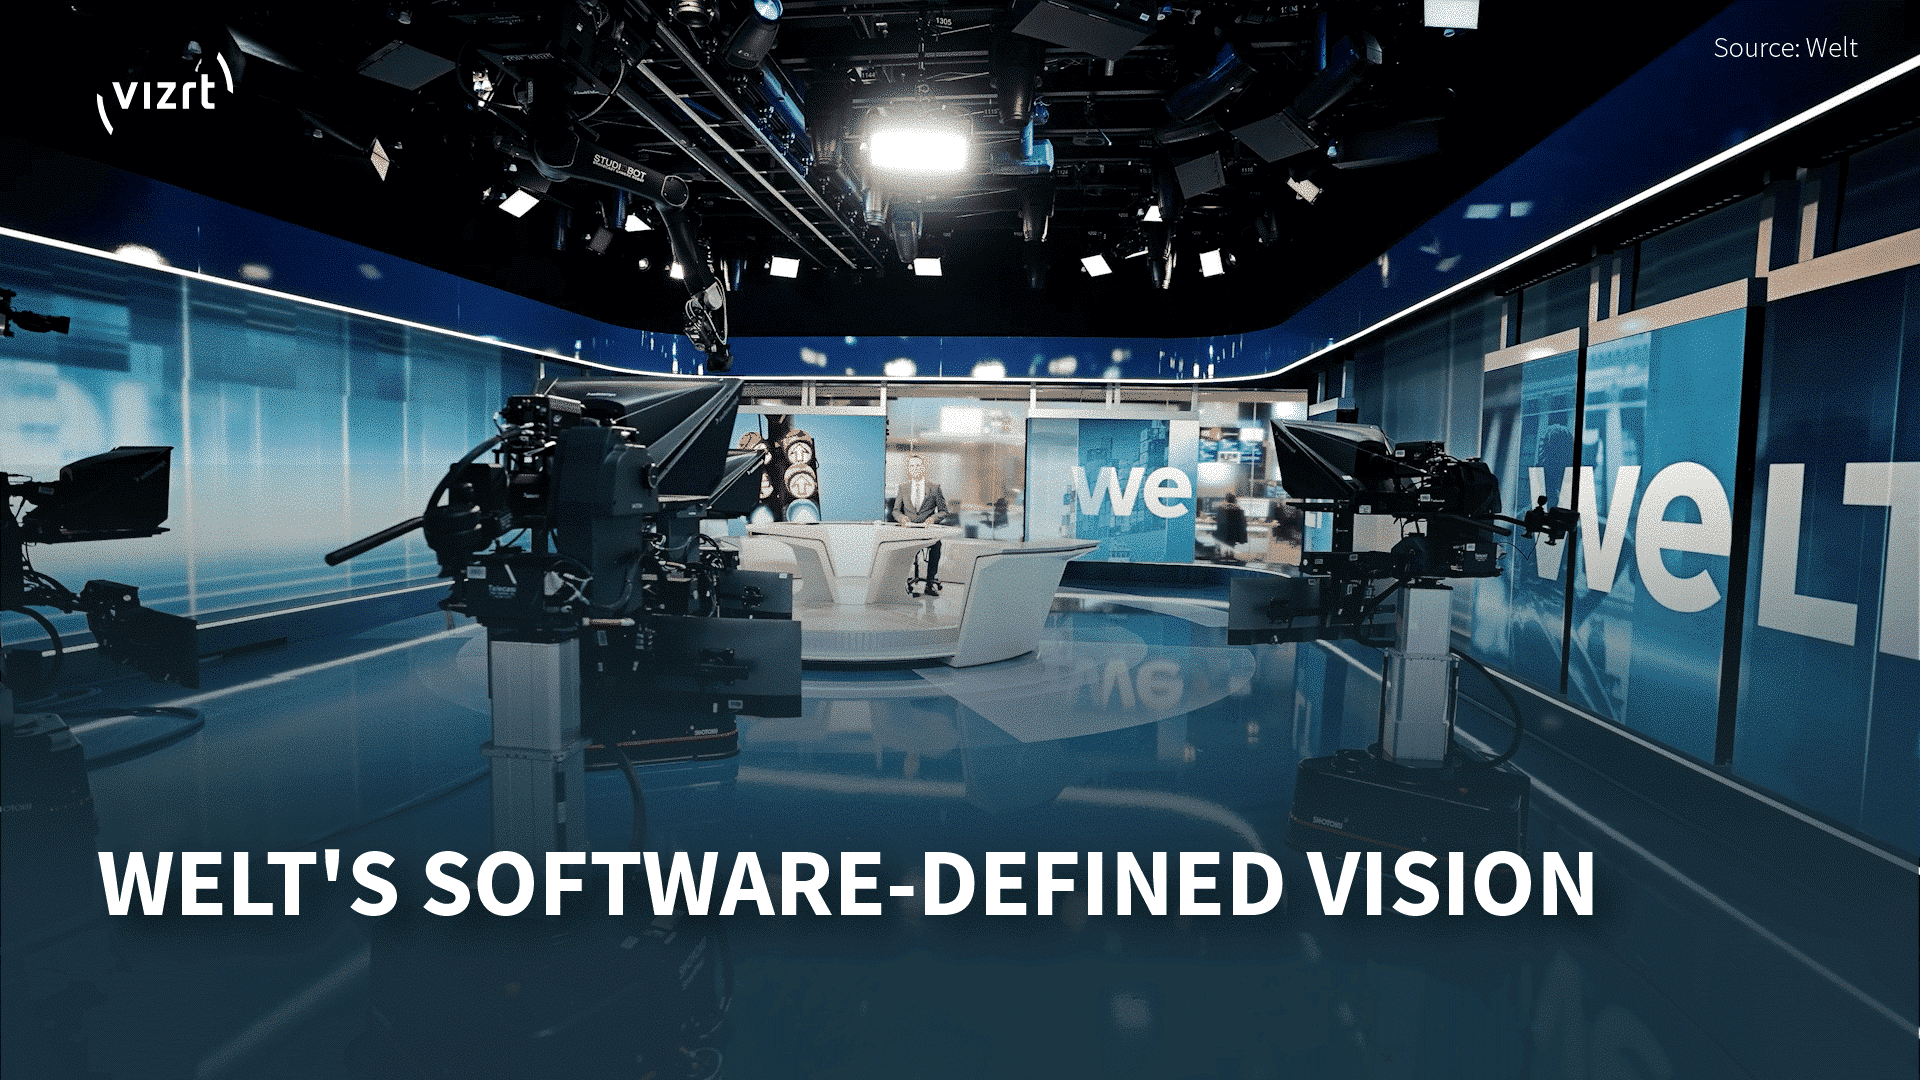 Case Study-Welt's software-defined vision